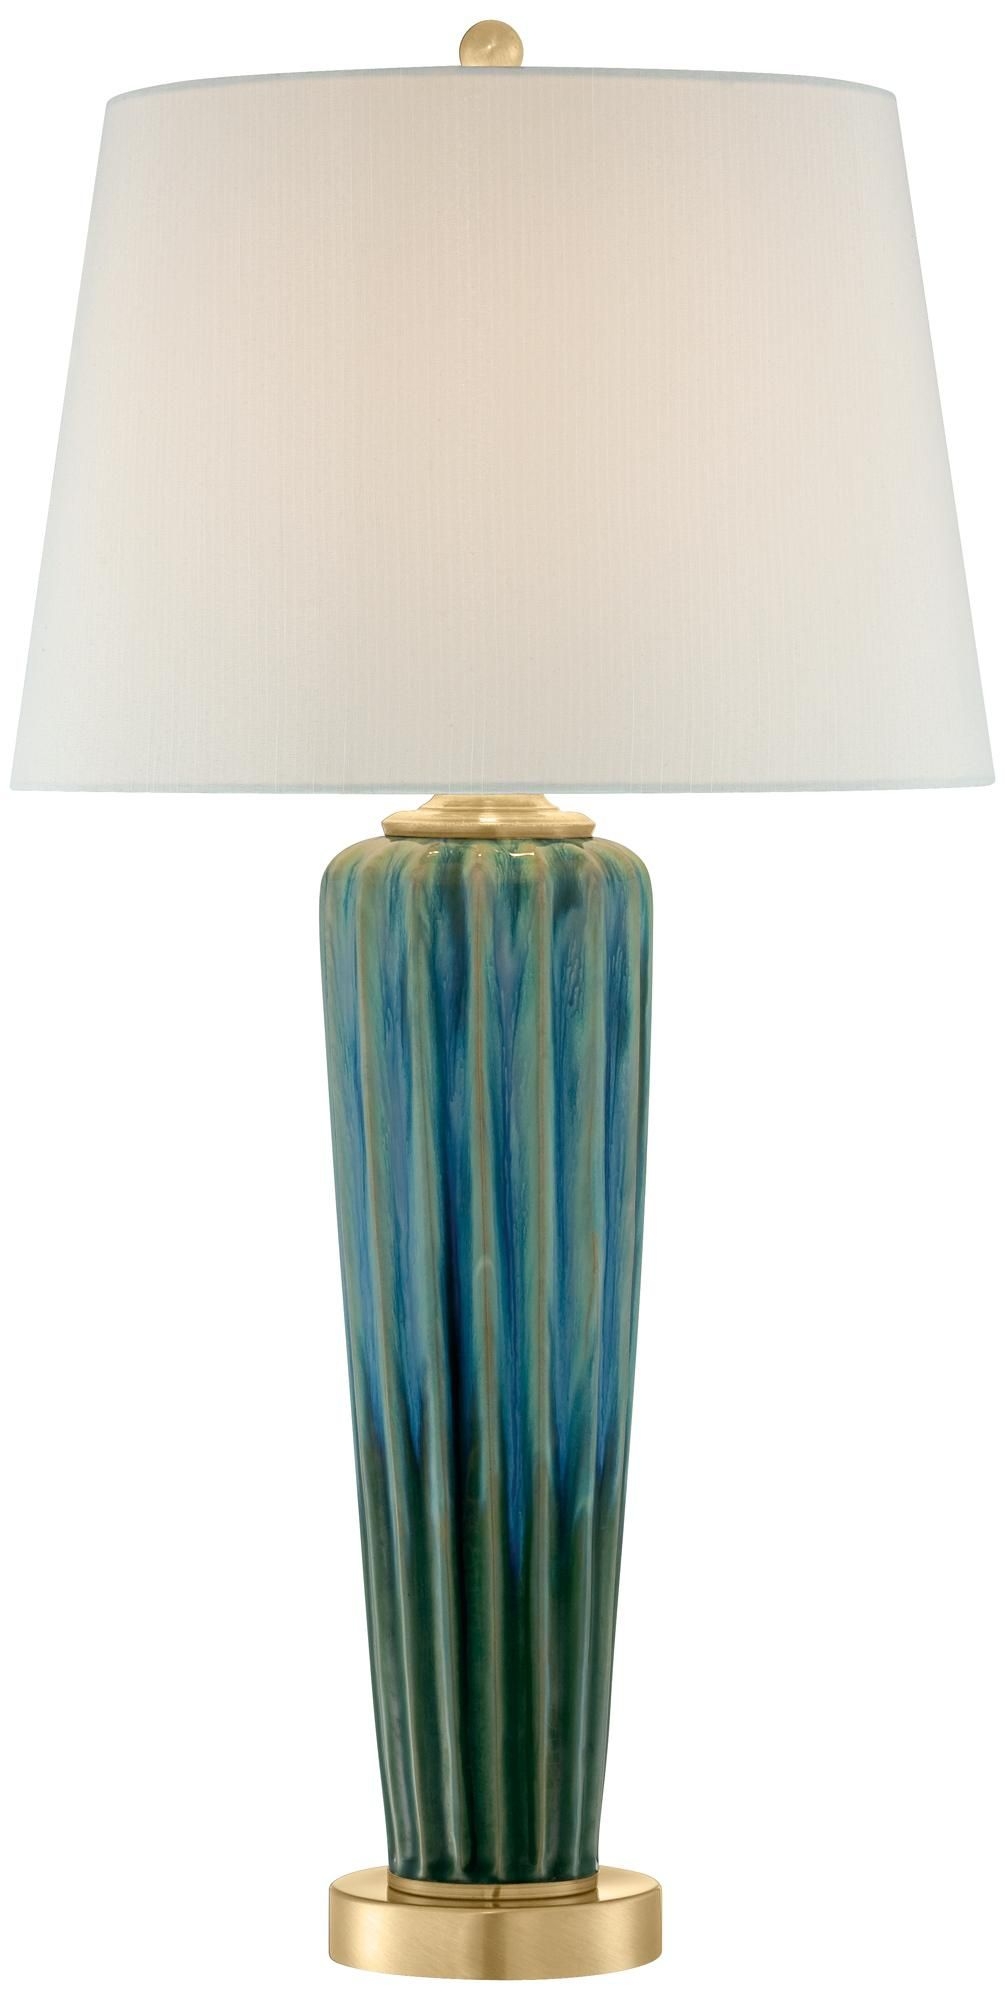 Blue ceramic table lamps